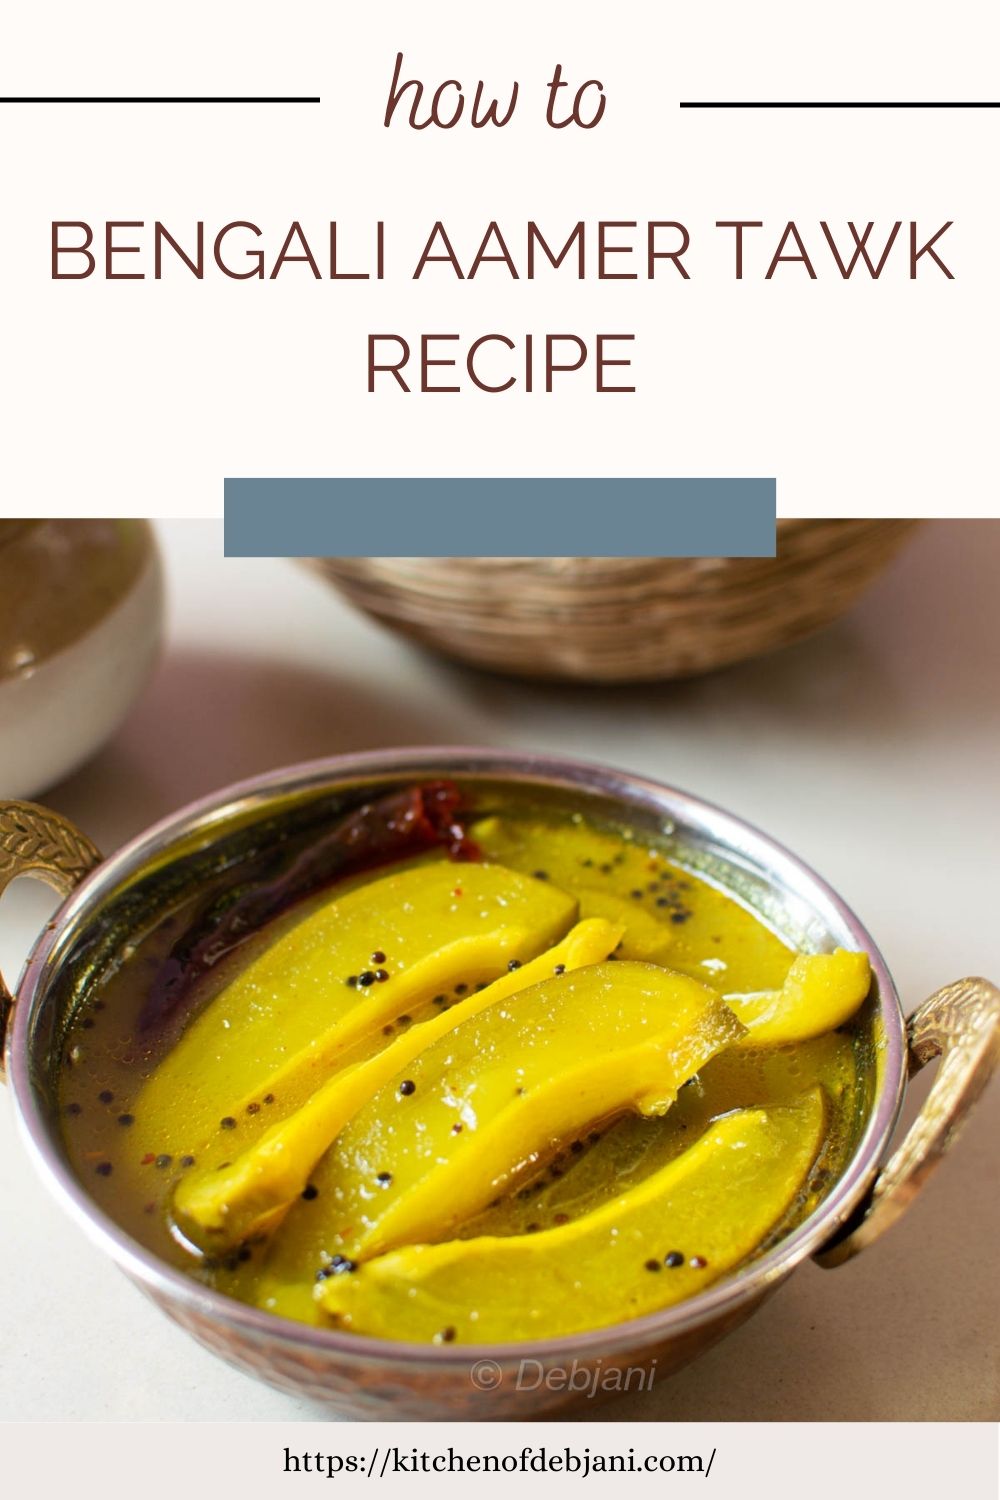 %Bengali Aamer Tawk Recipe pinterest pin